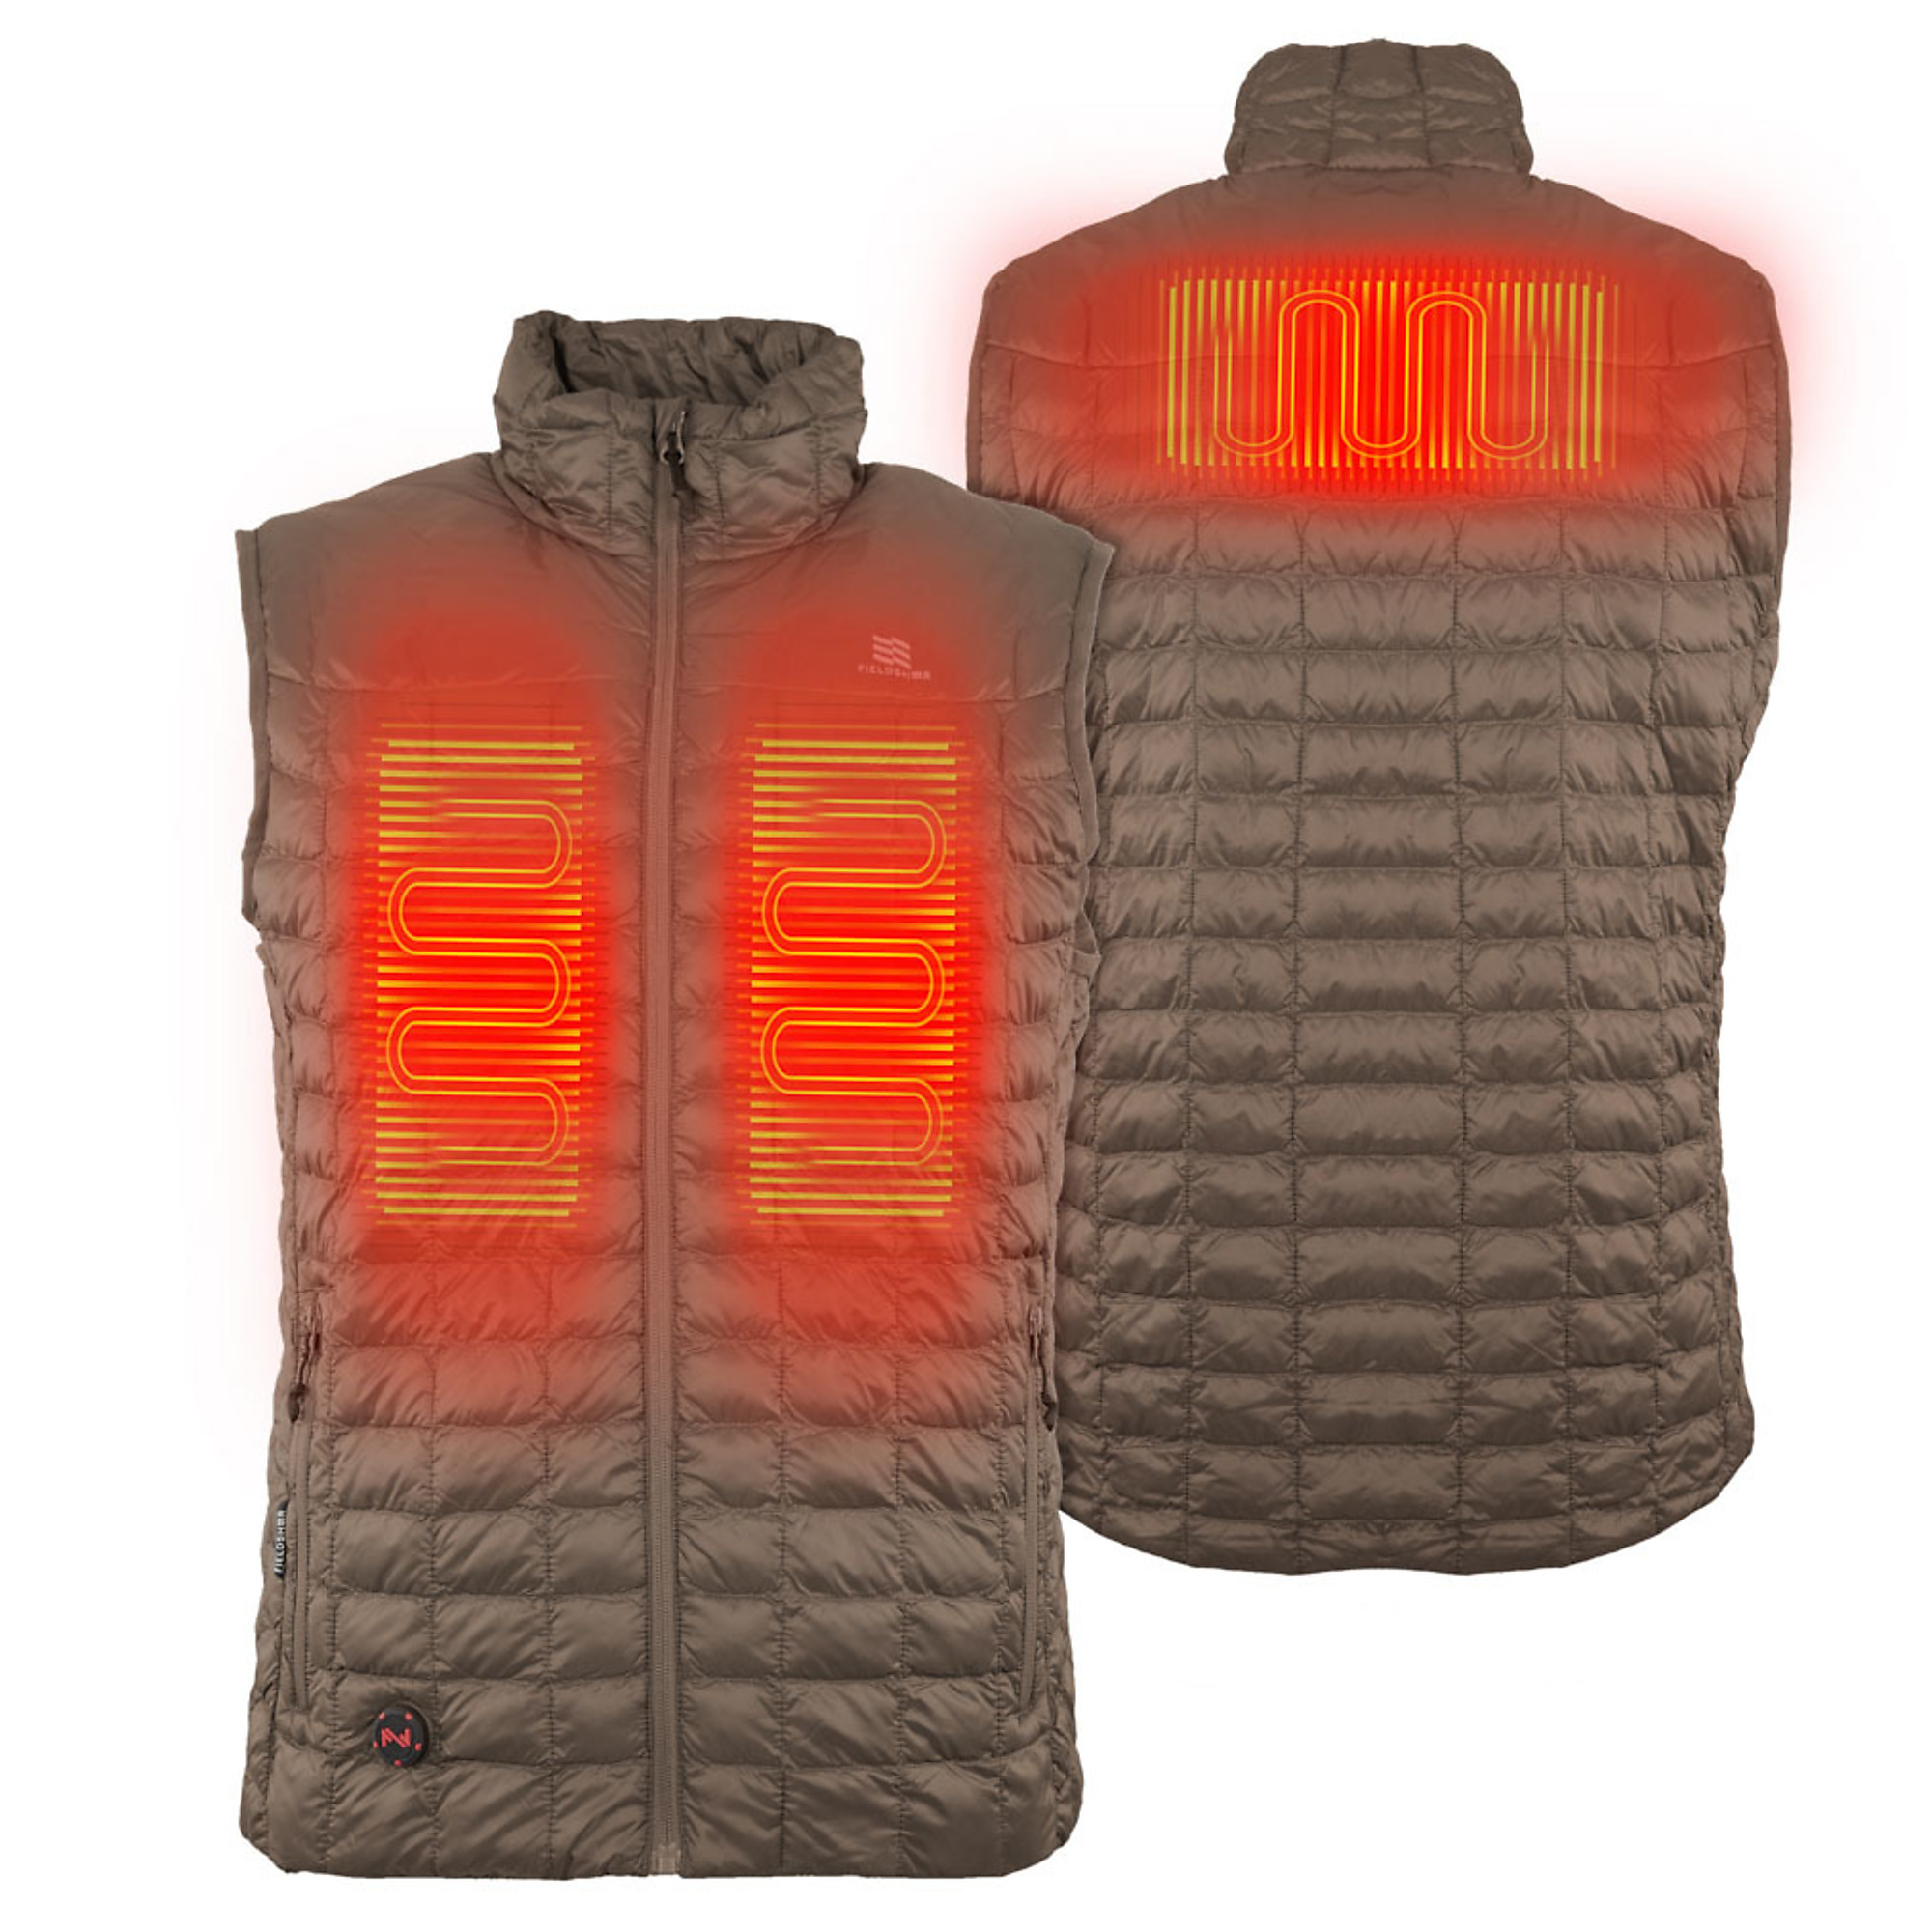 Fieldsheer, Men's Backcountry Heated Vest with 7.4v Battery, Size XL, Color Tan, Model MWMV04340521